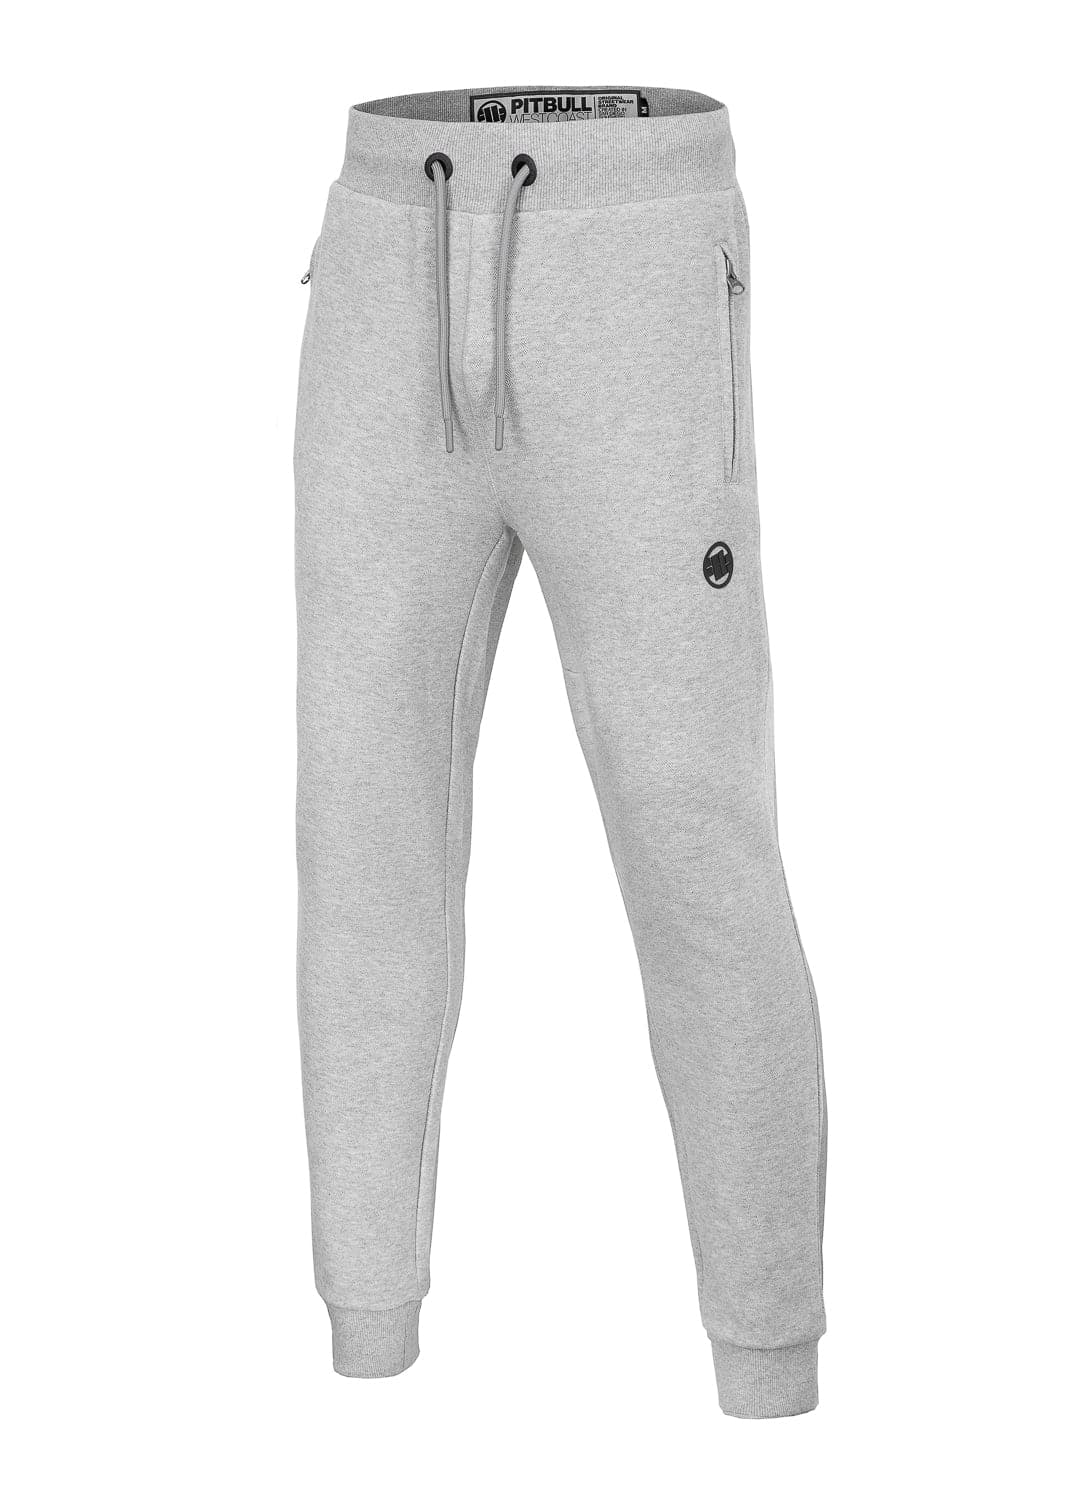 NEW LOGO Premium Pique Grey Track Pants.